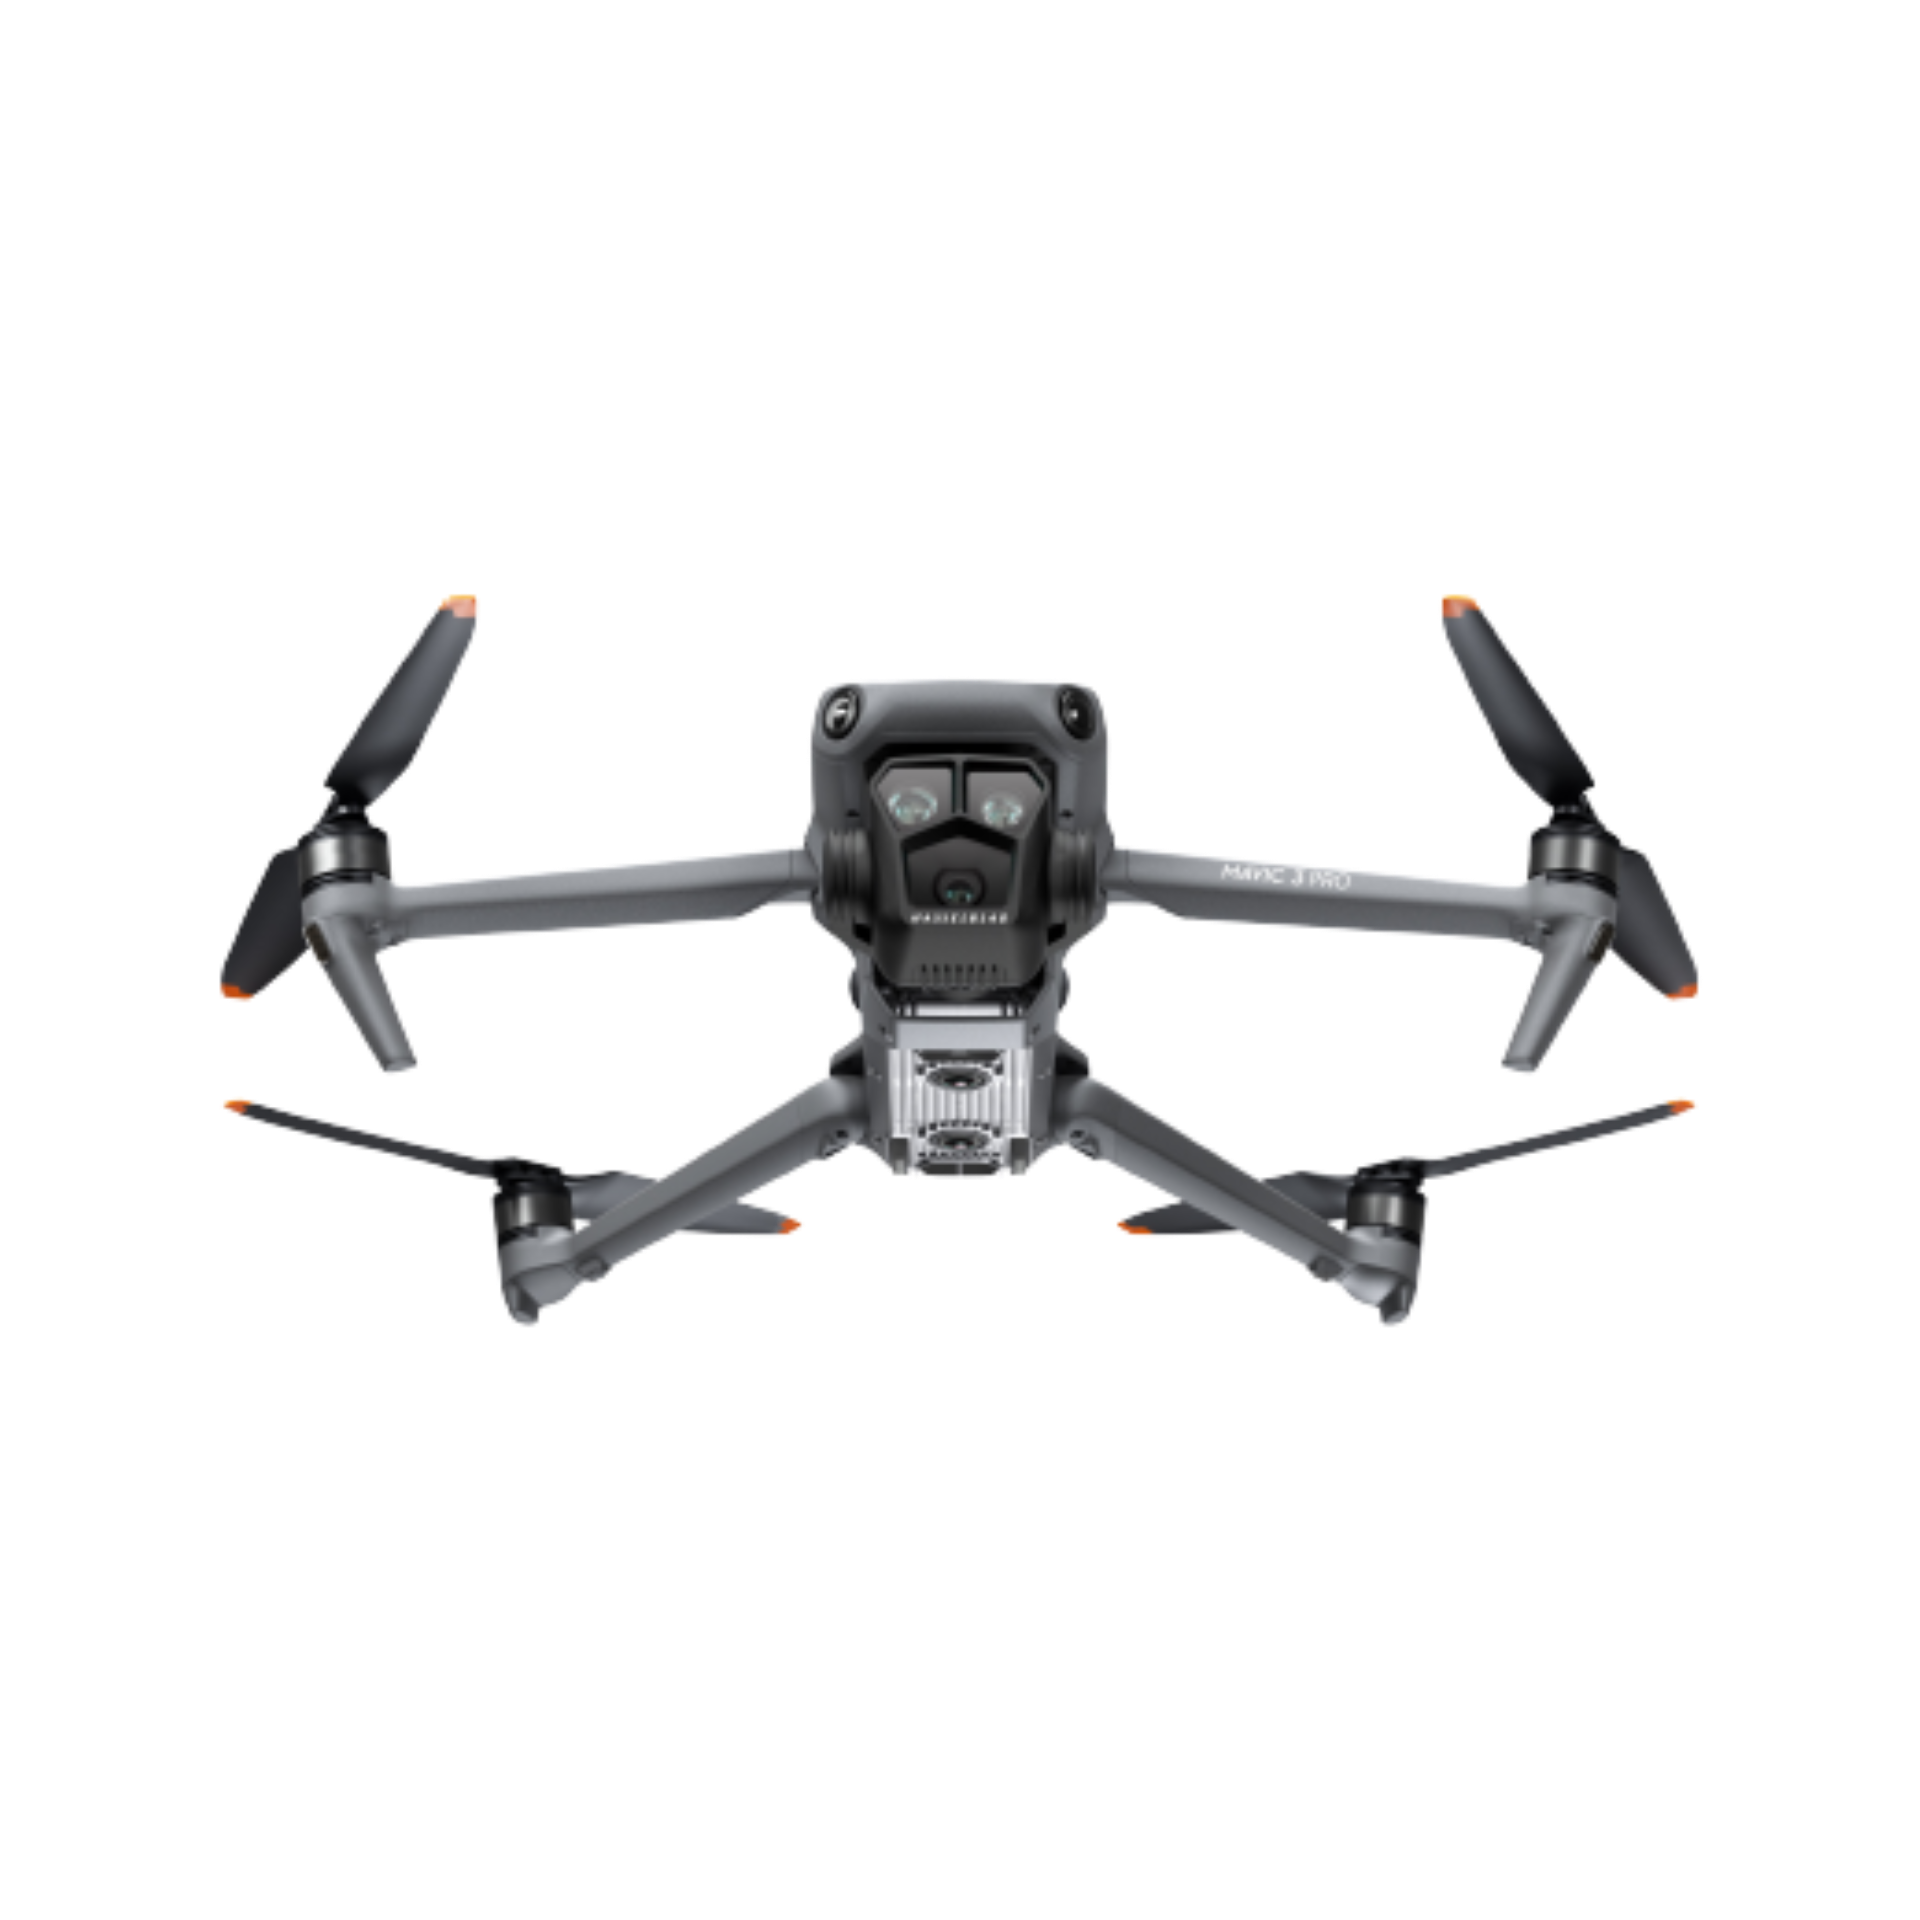 Mavic 3 Pro (DJI RC) - DroneLabs.ca